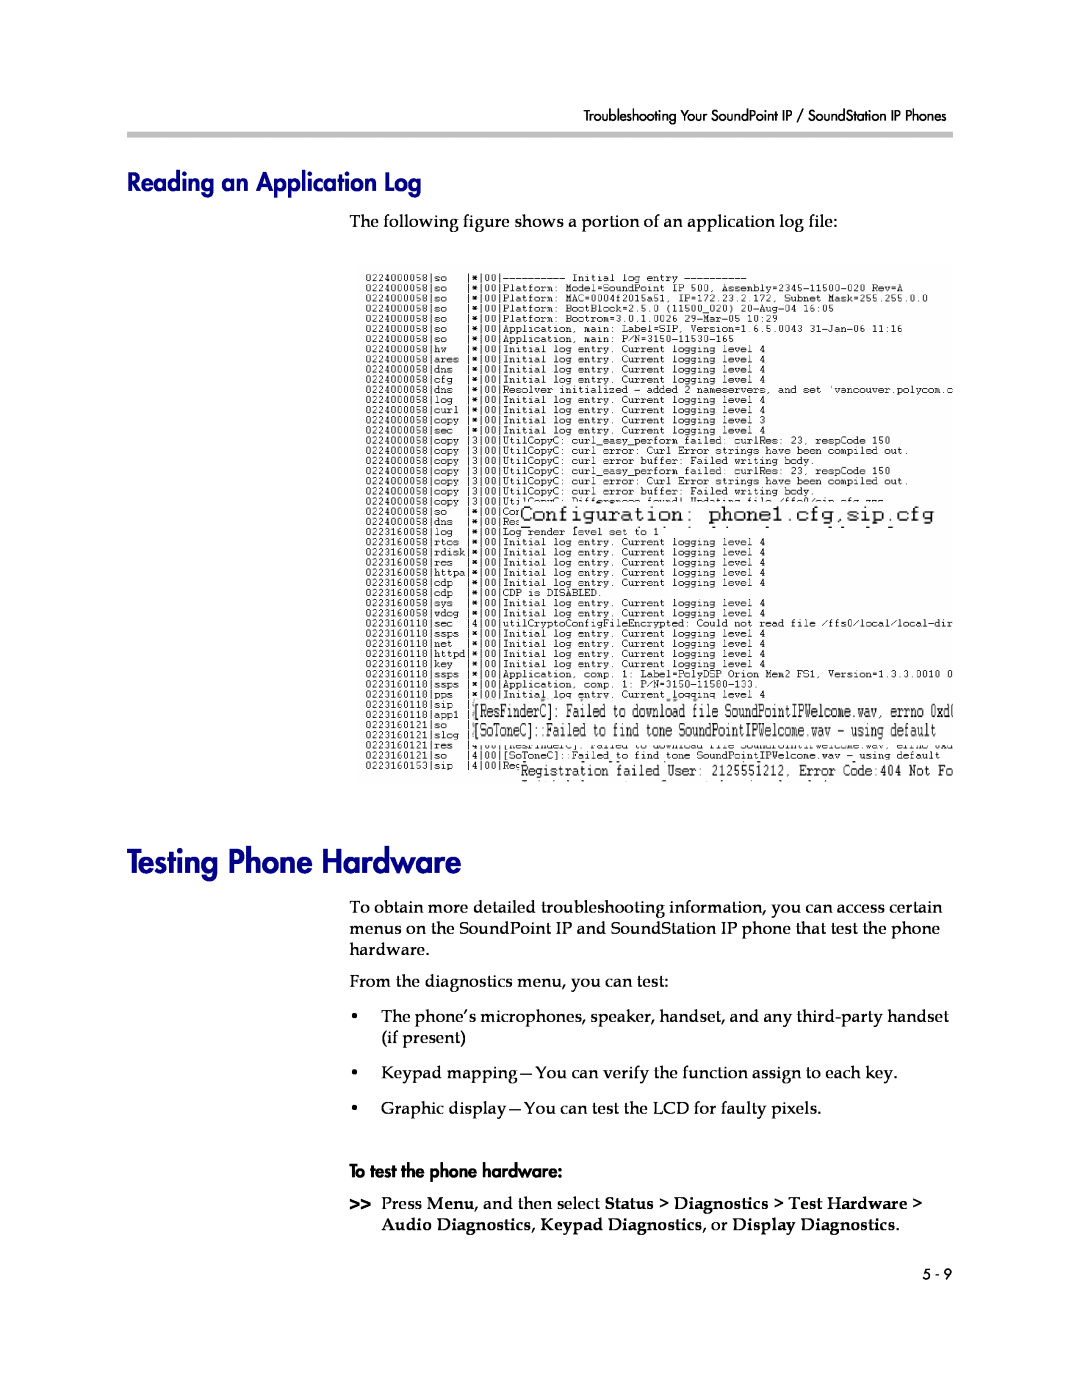 Polycom SIP 3.1 manual Testing Phone Hardware, Reading an Application Log 